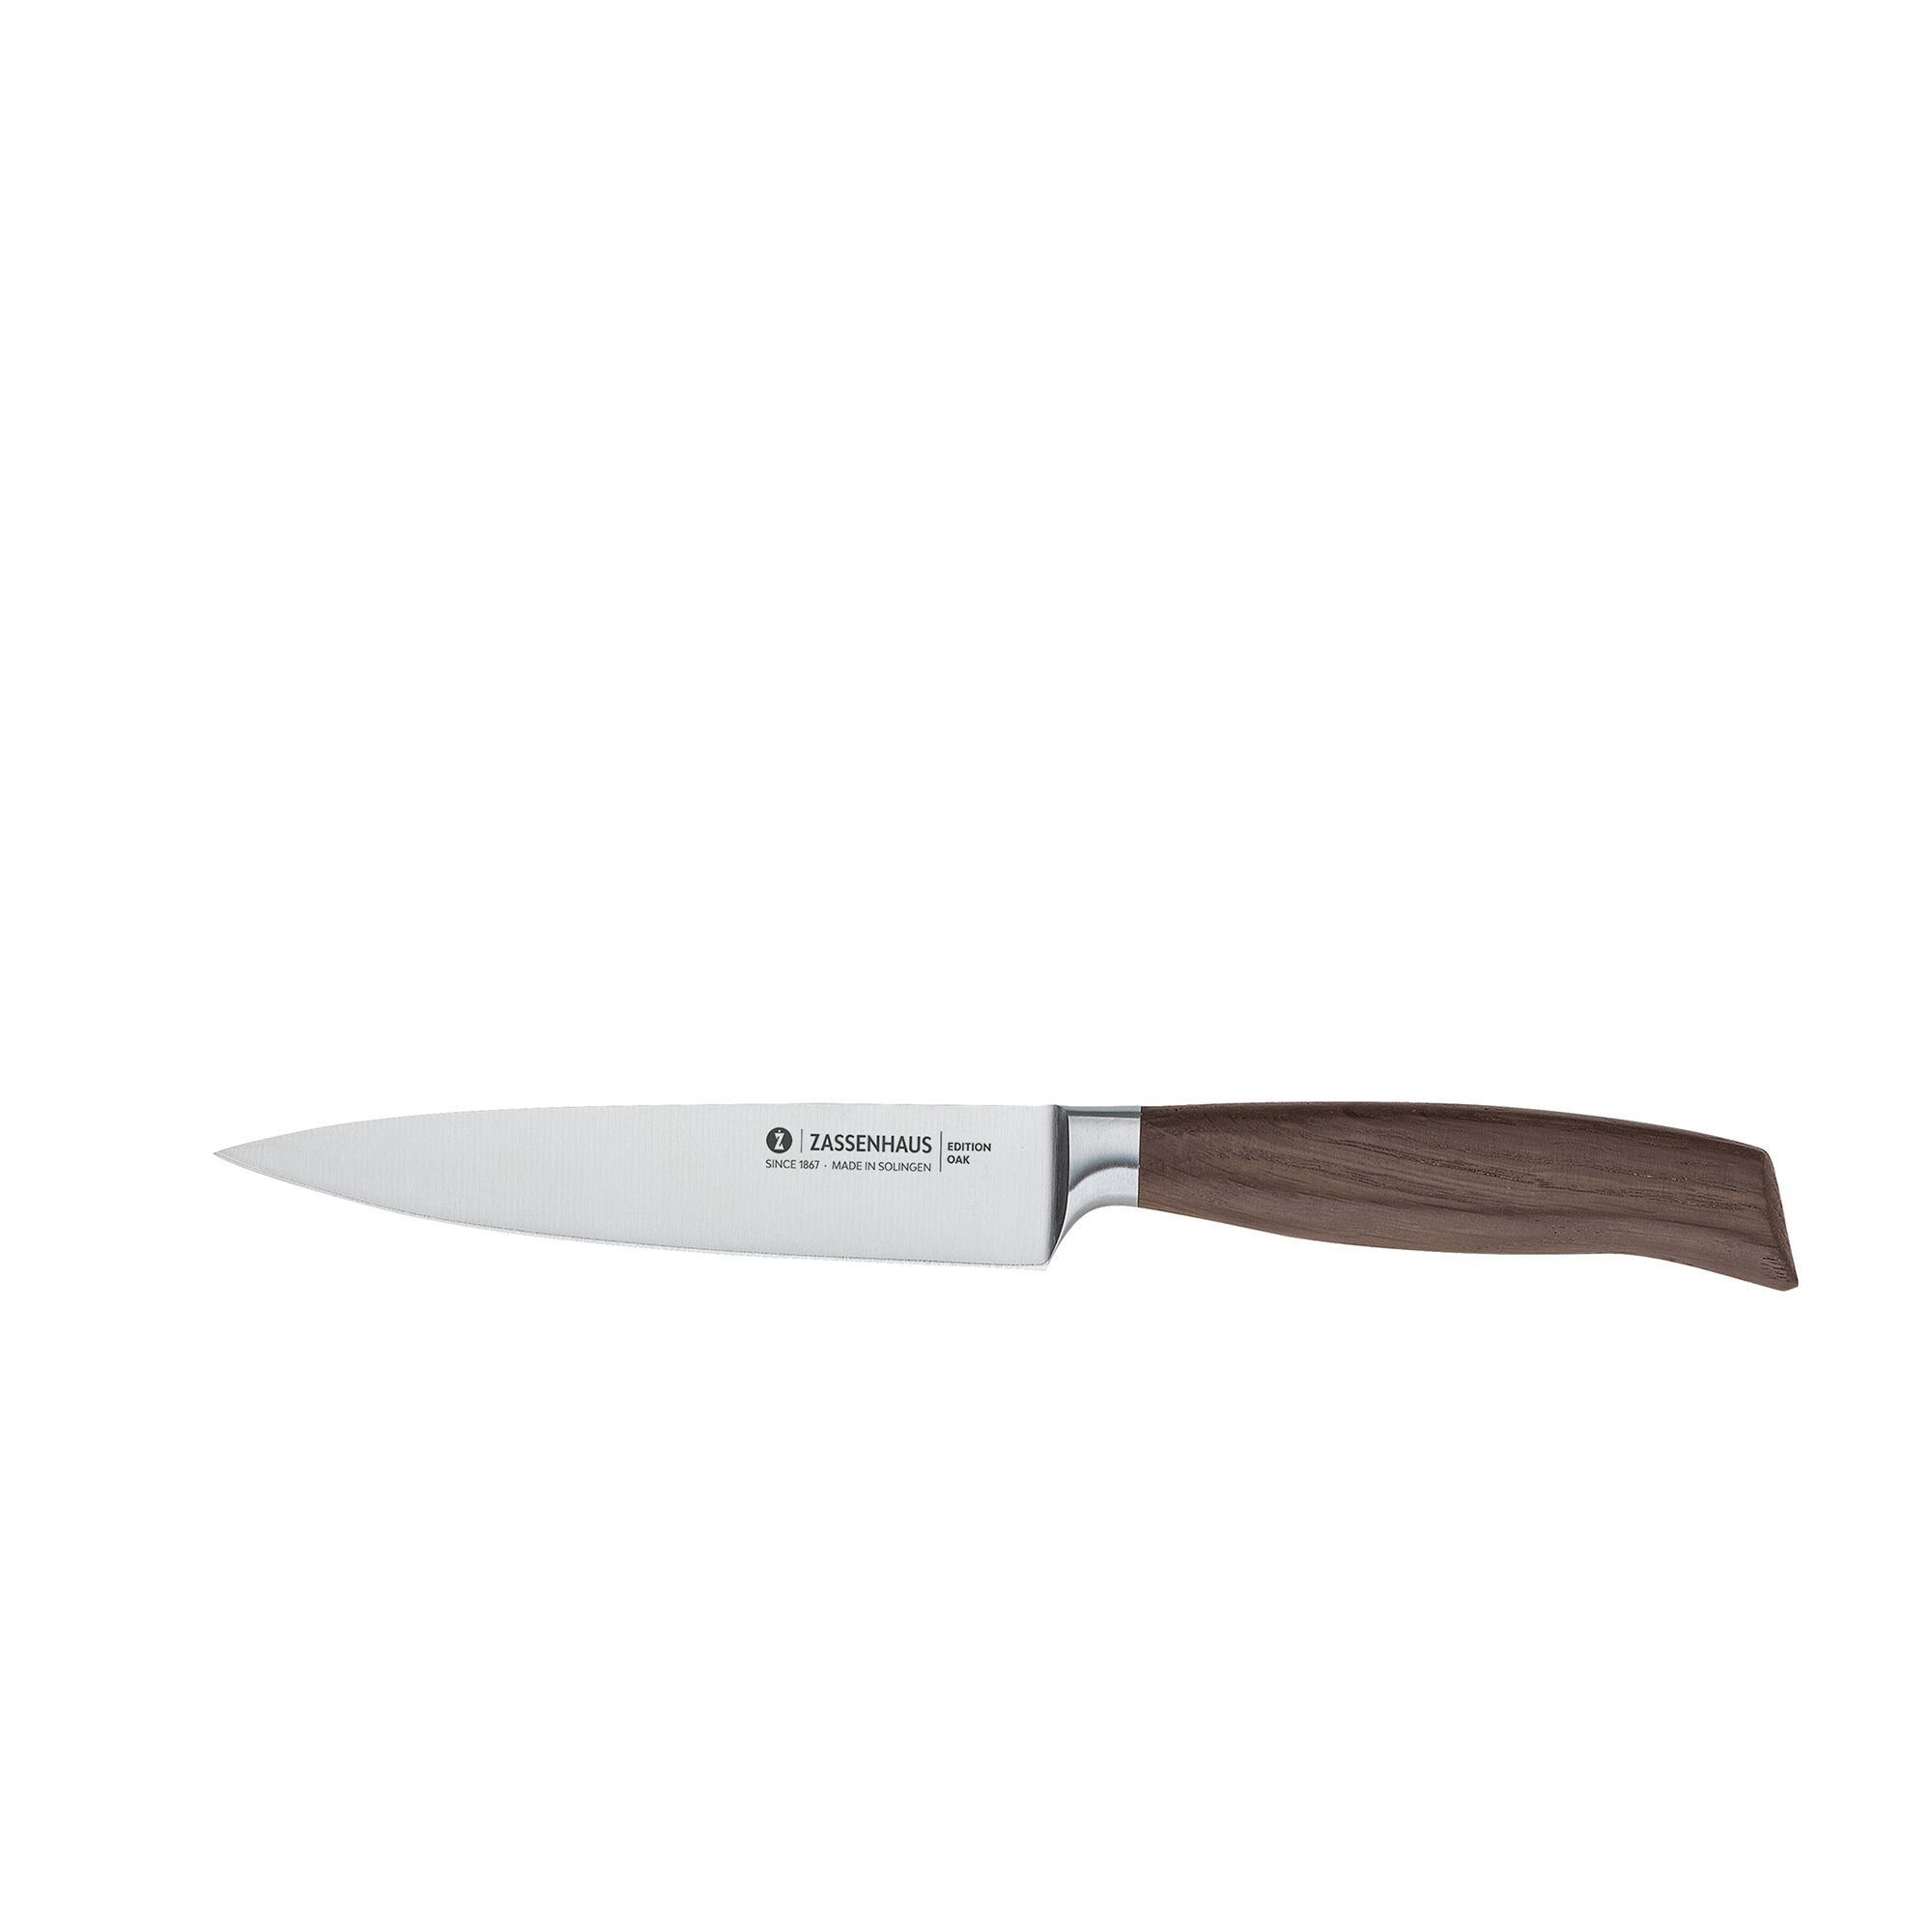 Zassenhaus - fillet knife flexible 16 cm - EDITION OAK